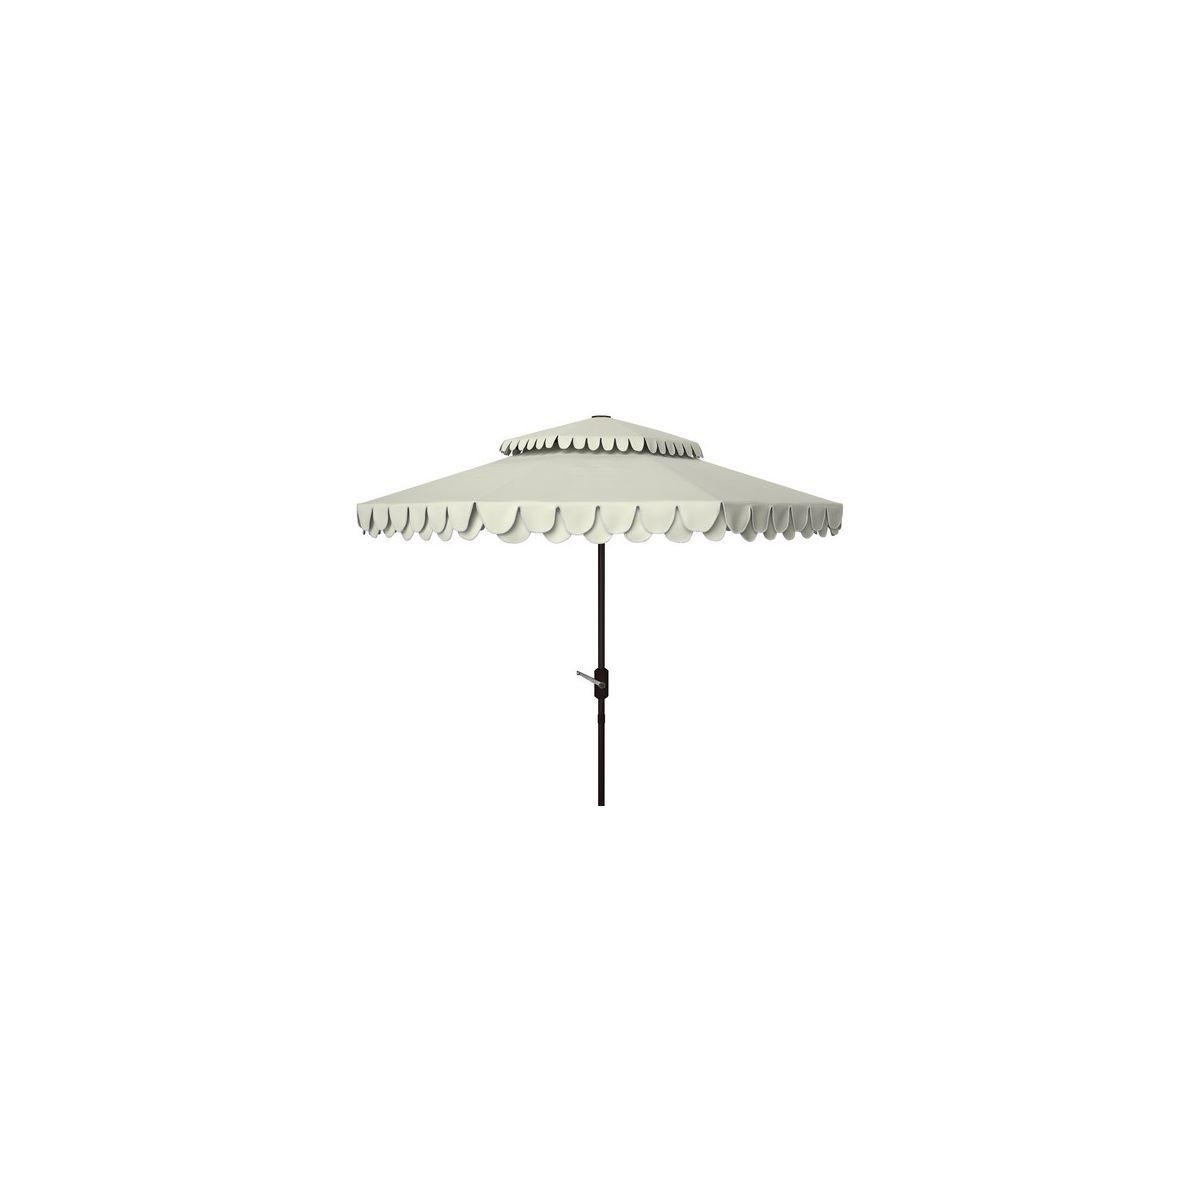 Safavieh Elegant Valance 9Ft Double Top Umbrella , PAT8206 - Beige/White